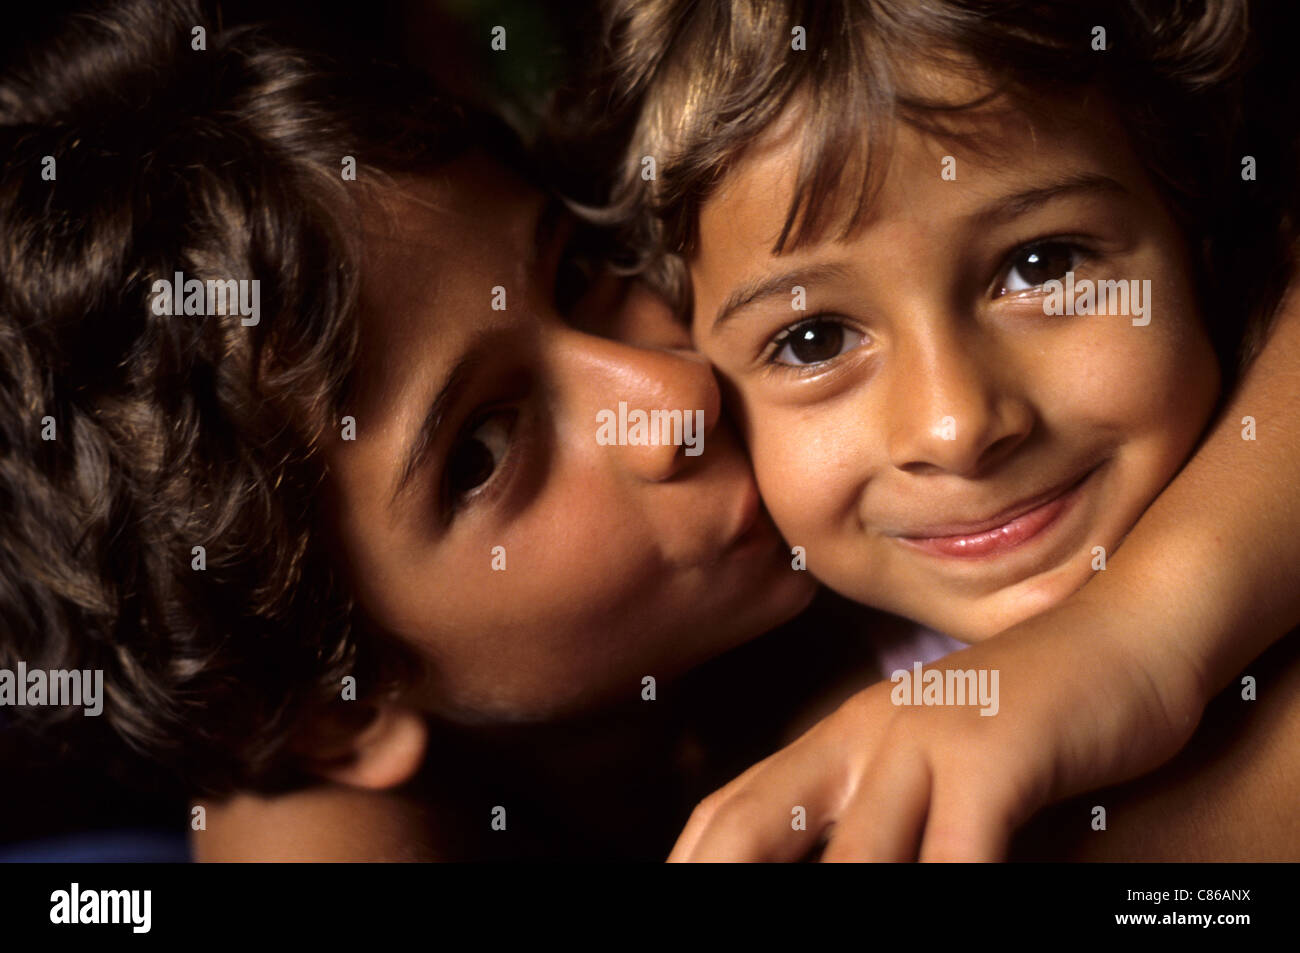 Rio de Janeiro, Brazil. Two smiling children kissing each other. Stock Photo